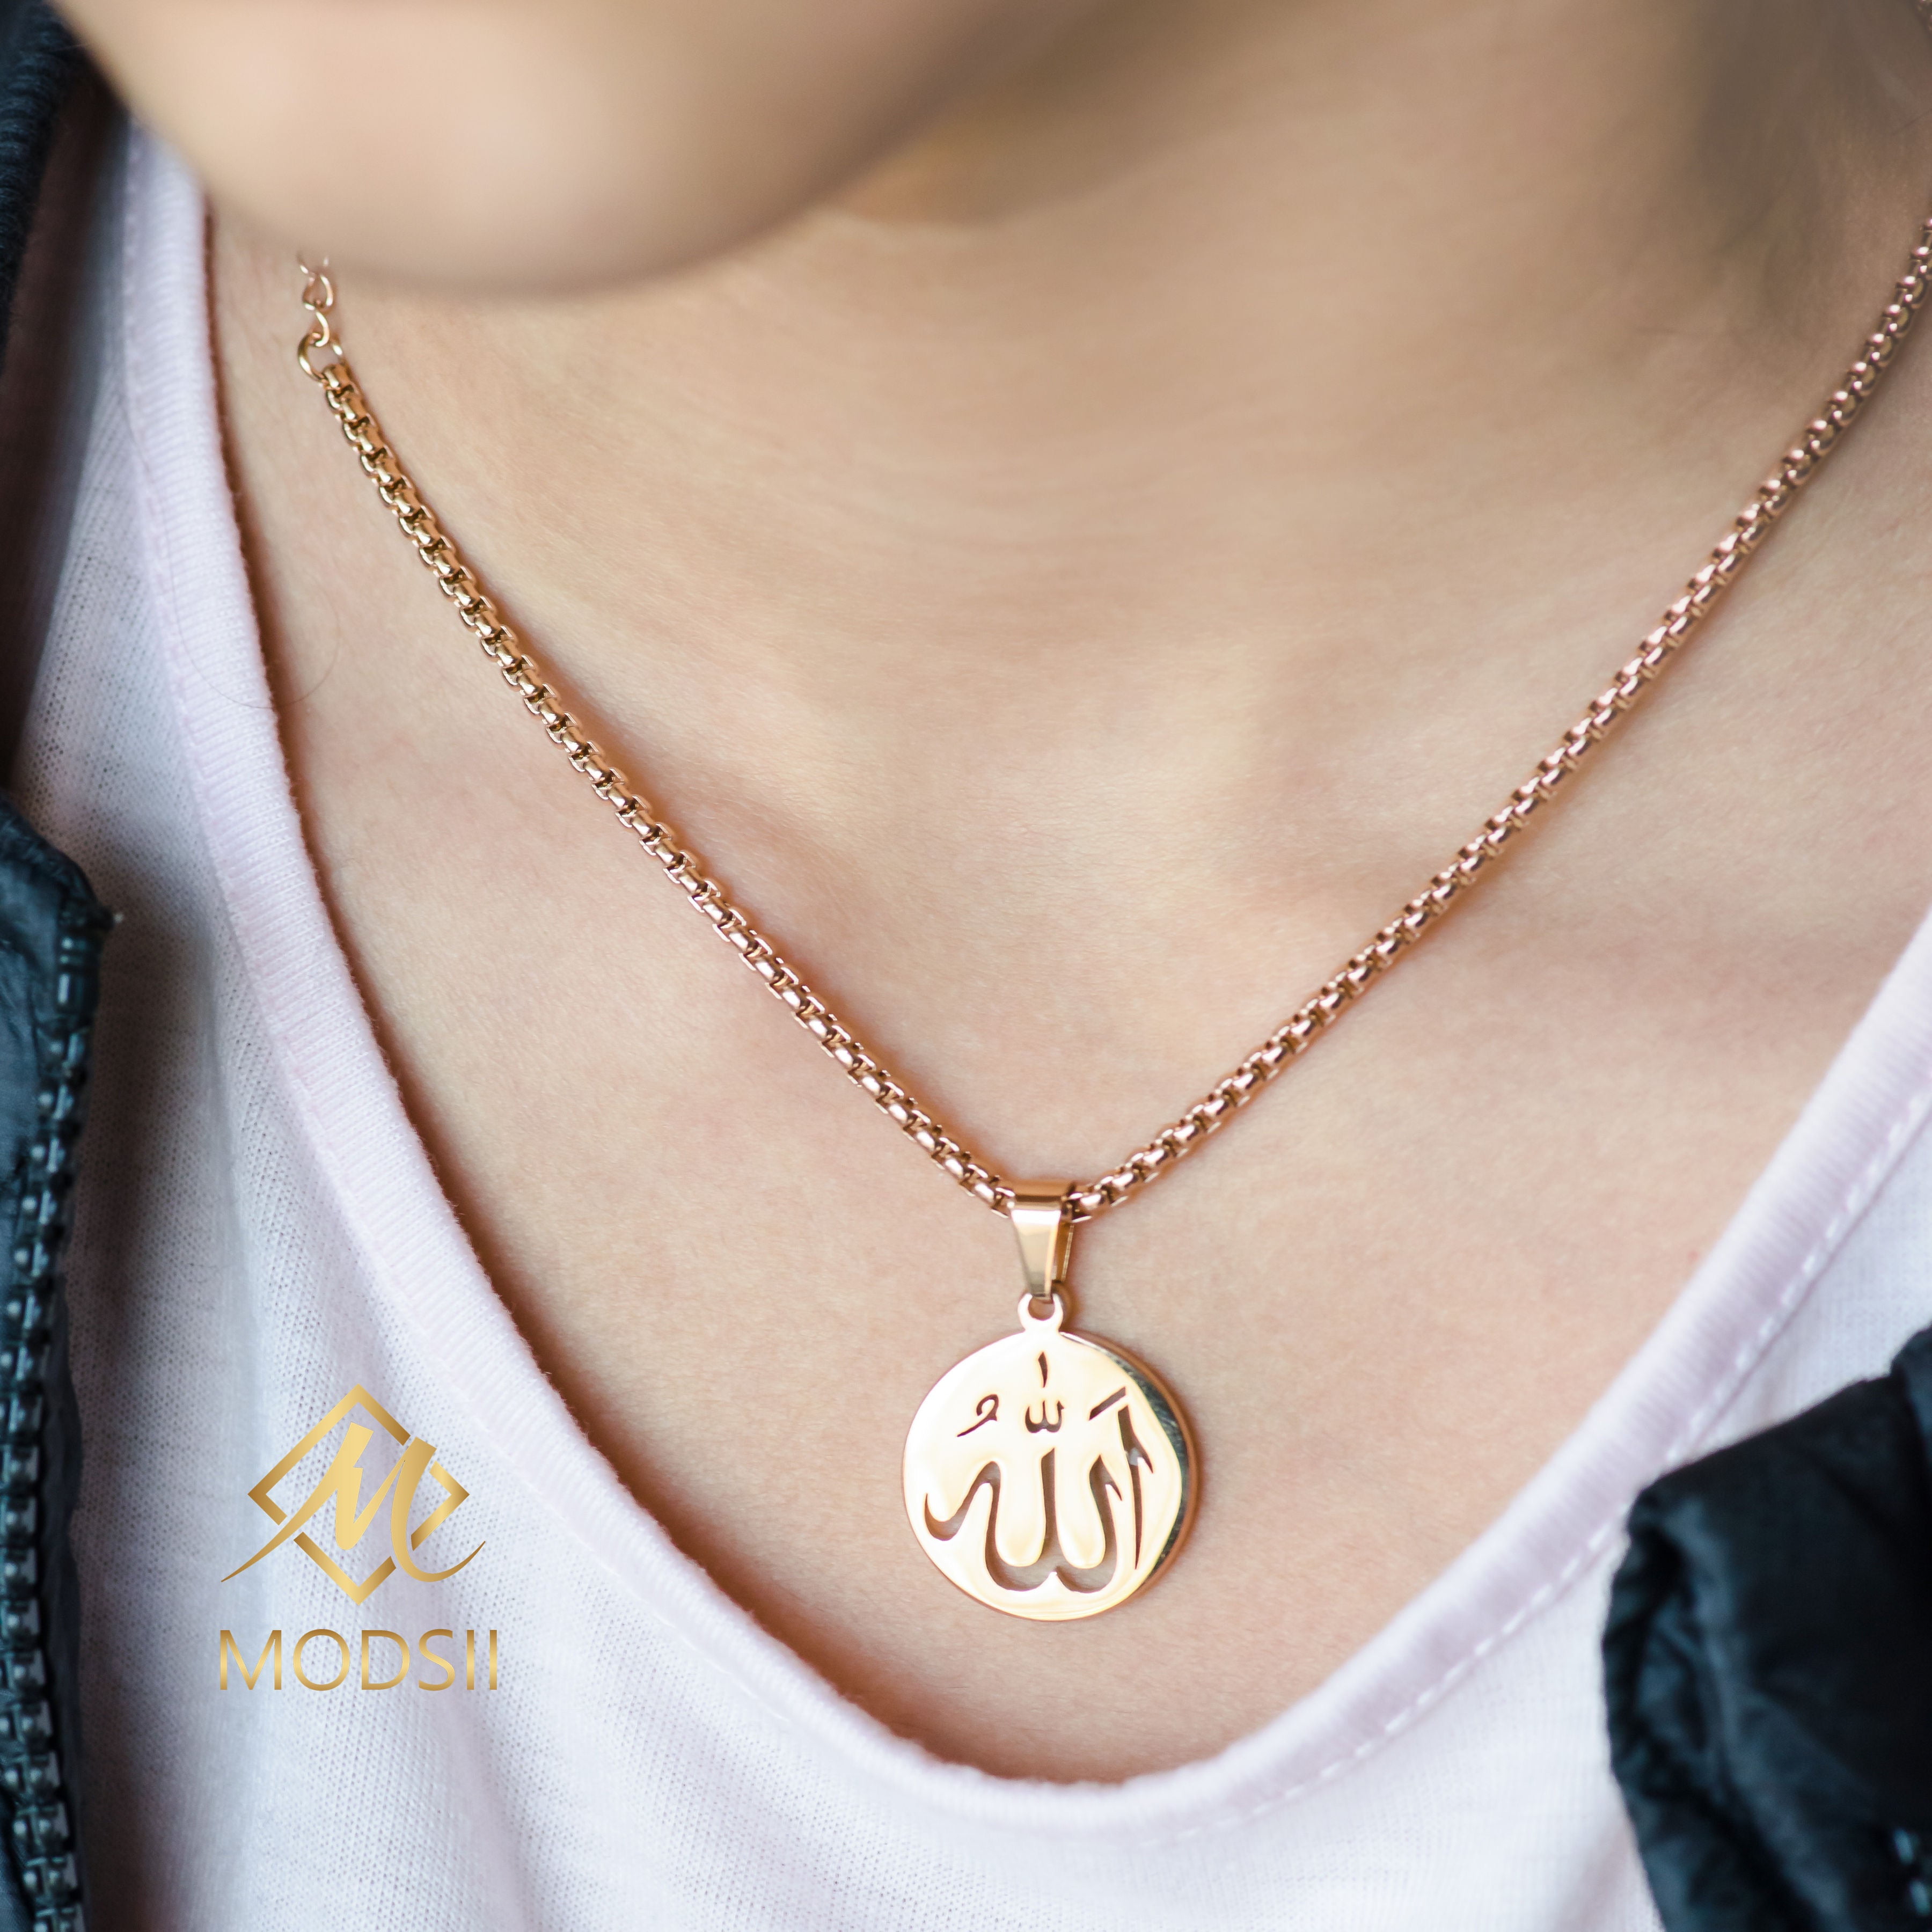 Buy U7 Men's Vintage Islamic Muslim Pendant Allah Necklace Stainless-Steel  at Amazon.in